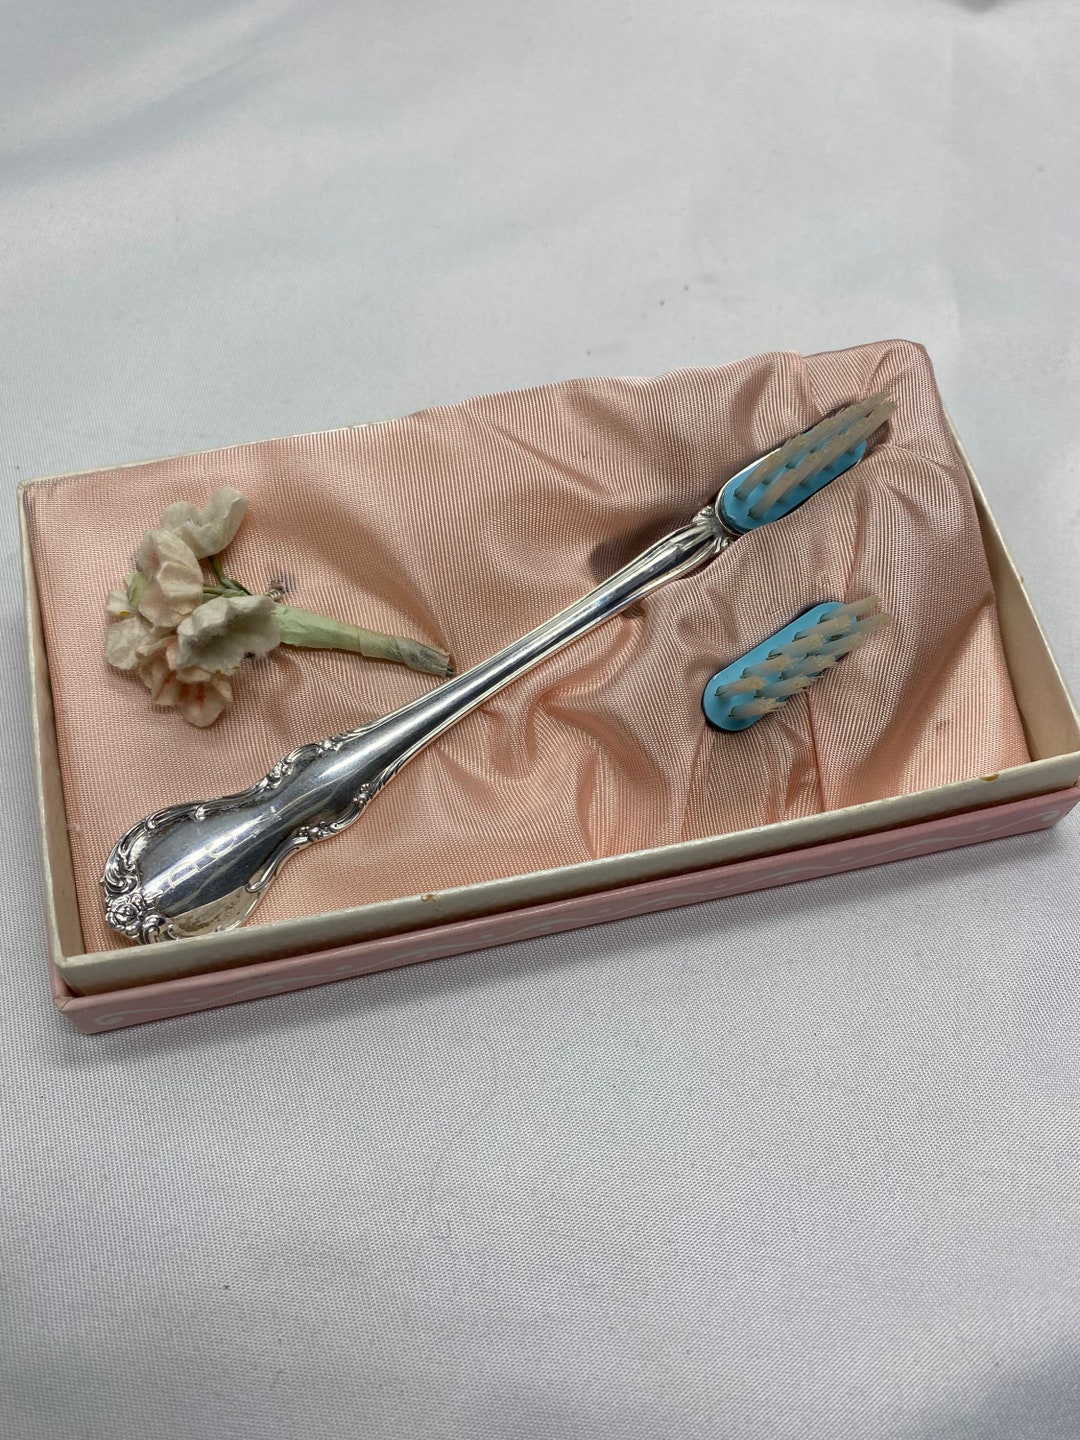 Vintage Sterling Silver Baby Toothbrush by Towel in Original - Etsy UK